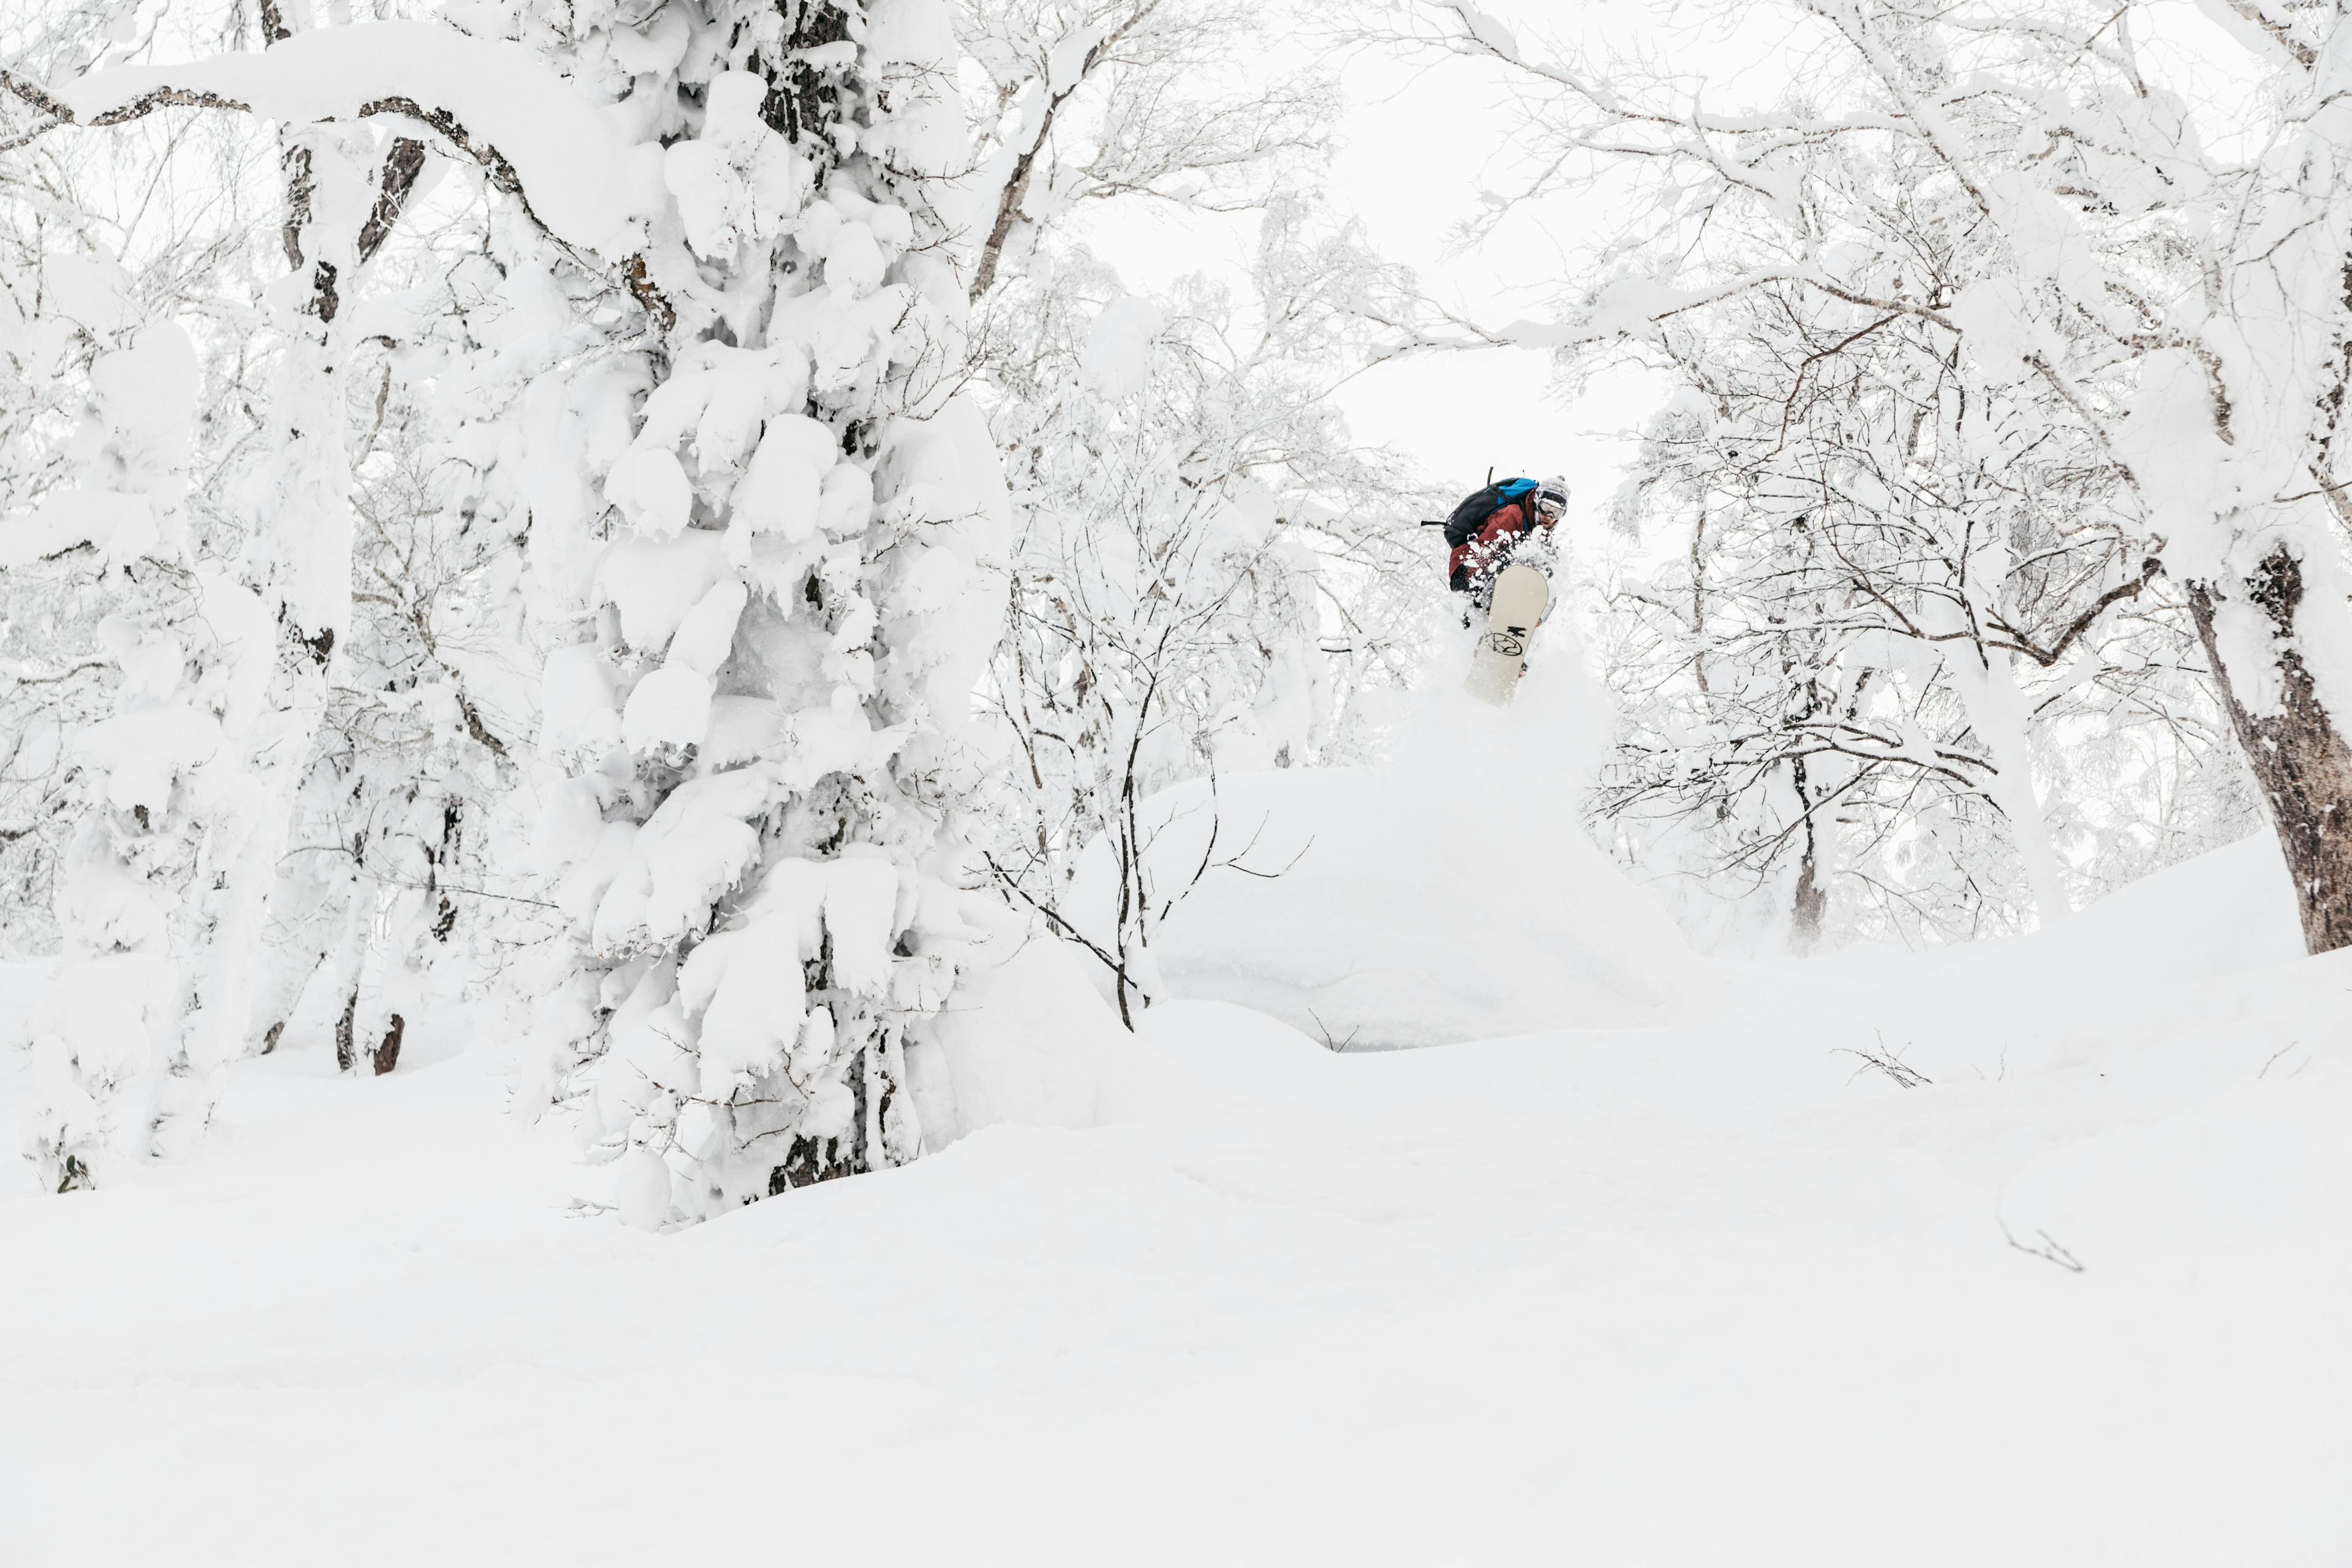 snowboarding in the fresh powder snow of Niseko